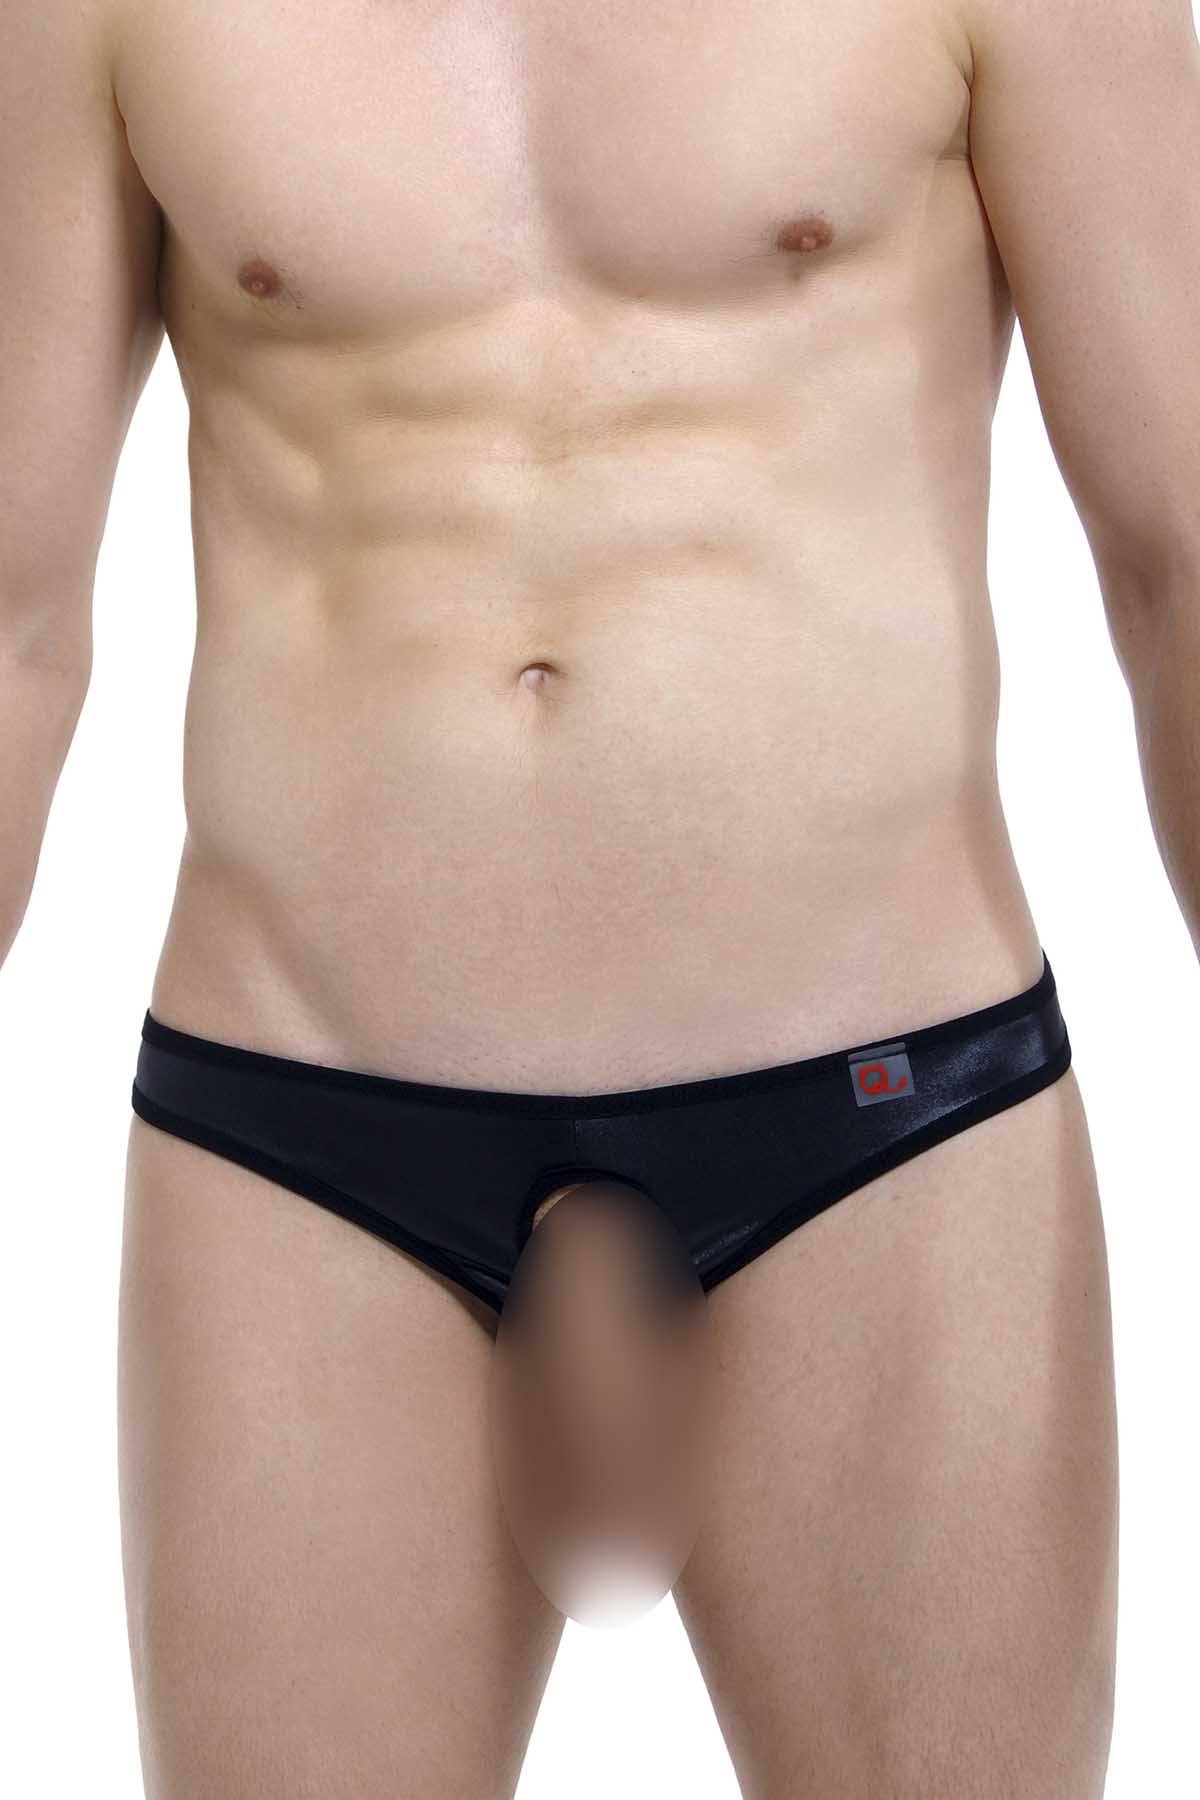 PetitQ Black Wet-Look Open-Front Thong